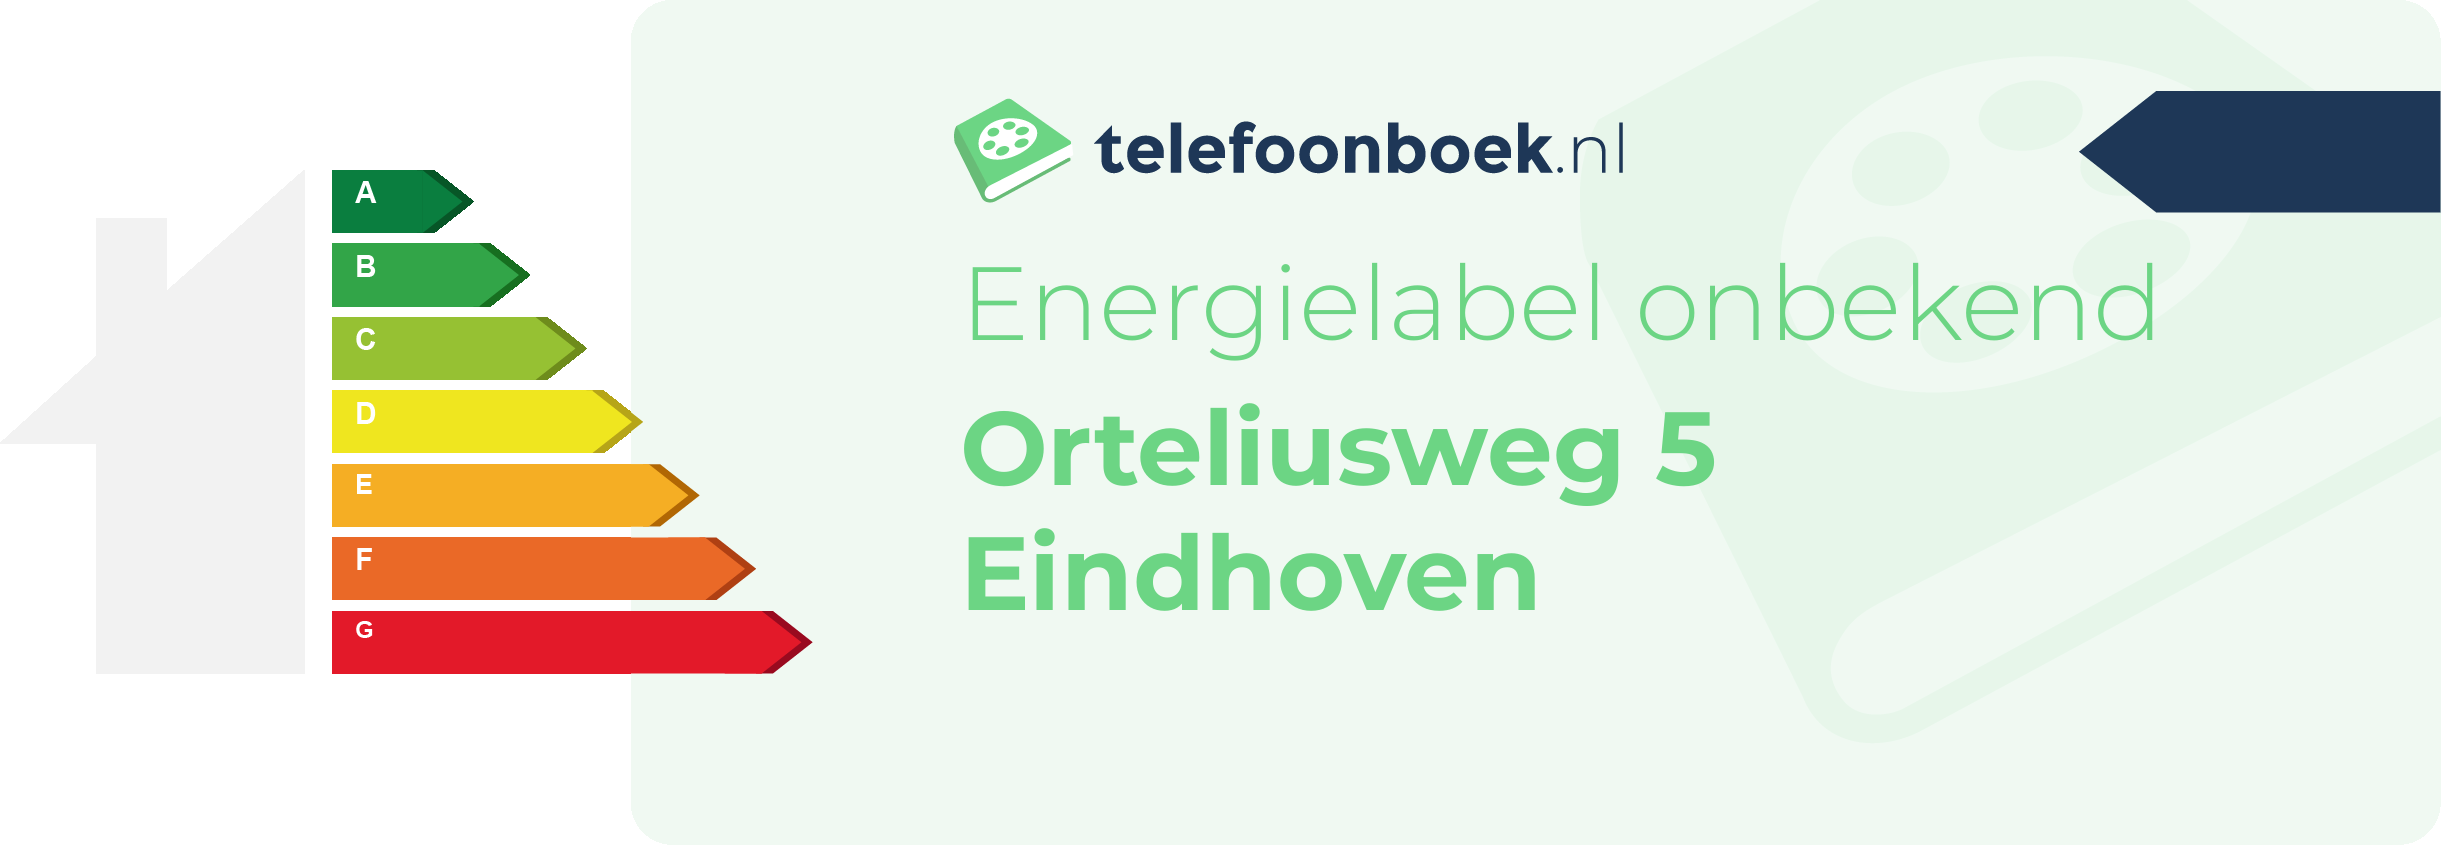 Energielabel Orteliusweg 5 Eindhoven